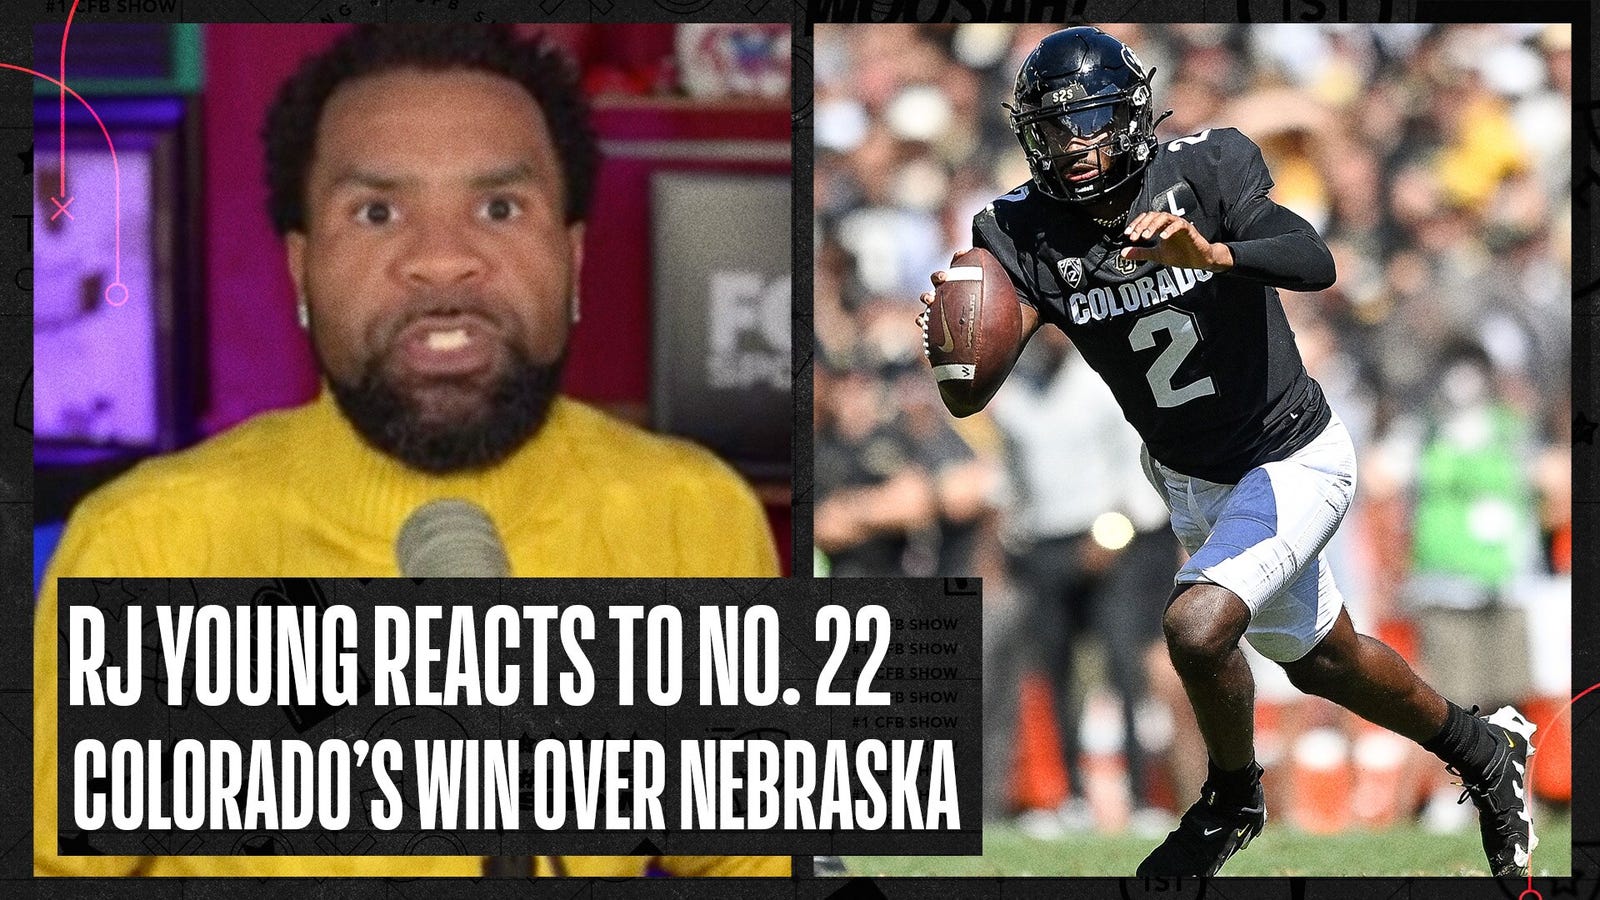 RJ Young reacts to No. 22 Colorado's 36-14 win over Nebraska